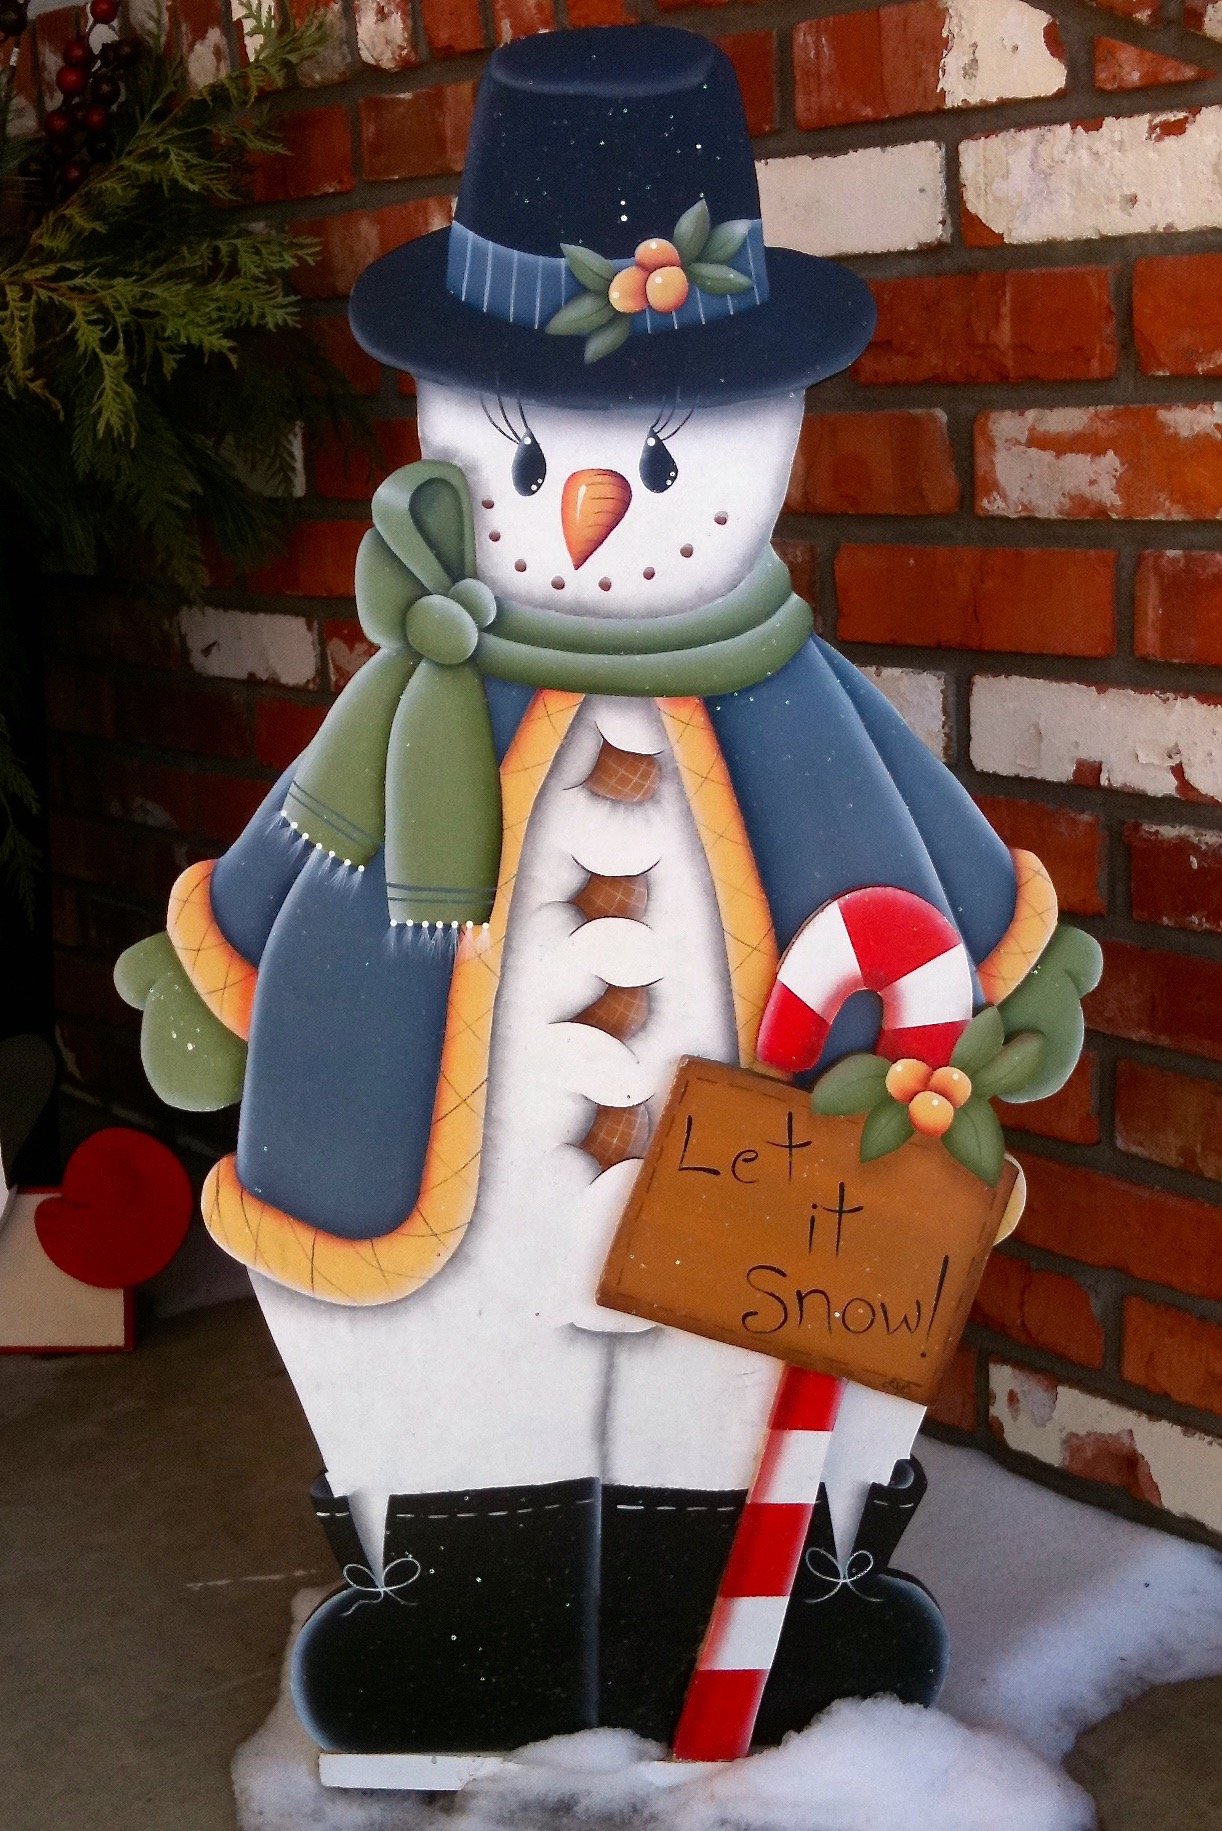 Decorative, hand-painted wood snowman on doorstep.